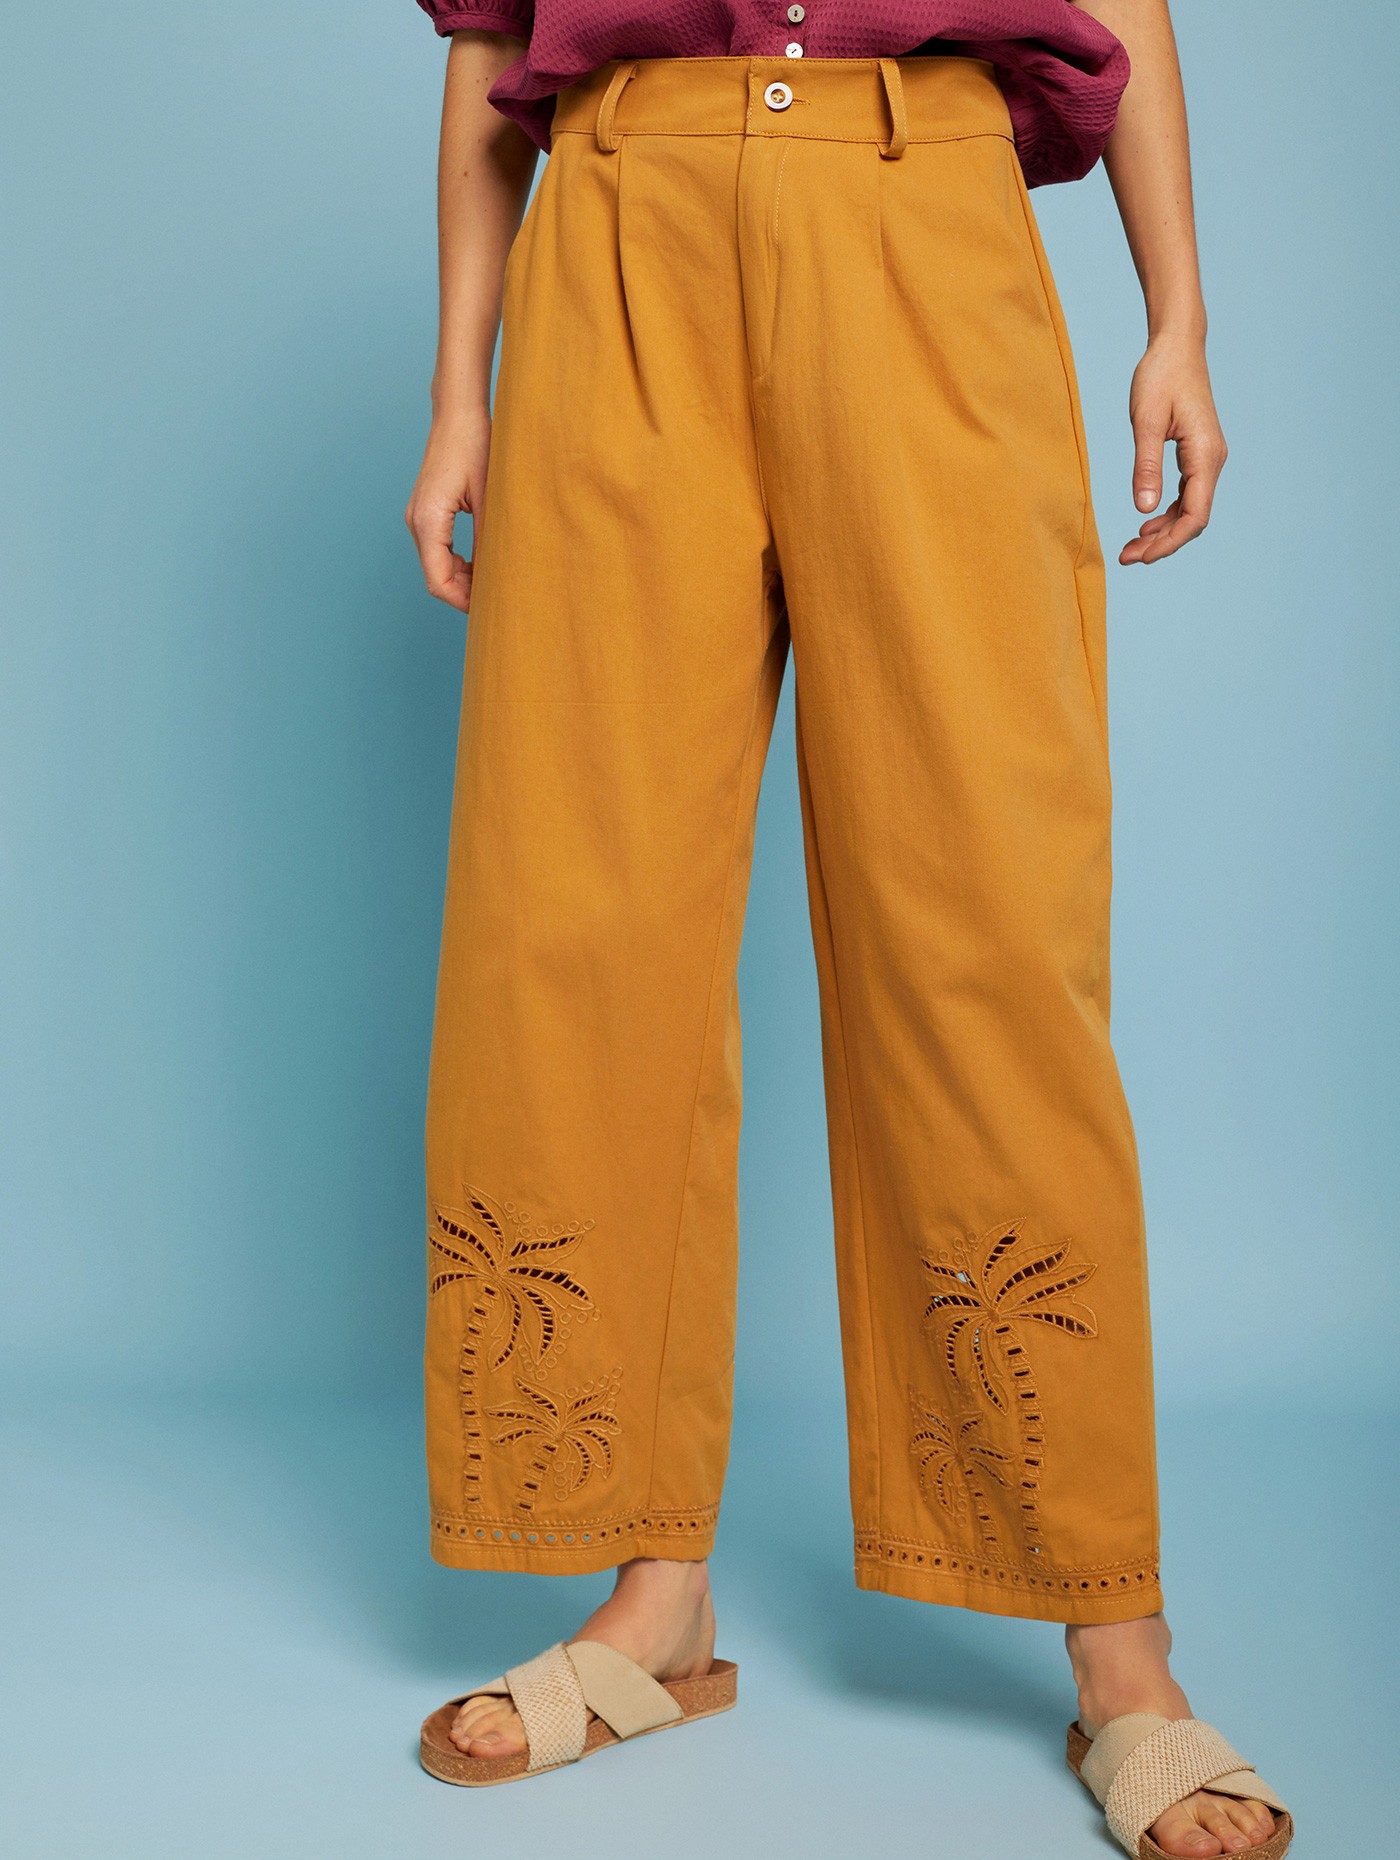 Palm tree embroidery pants 3